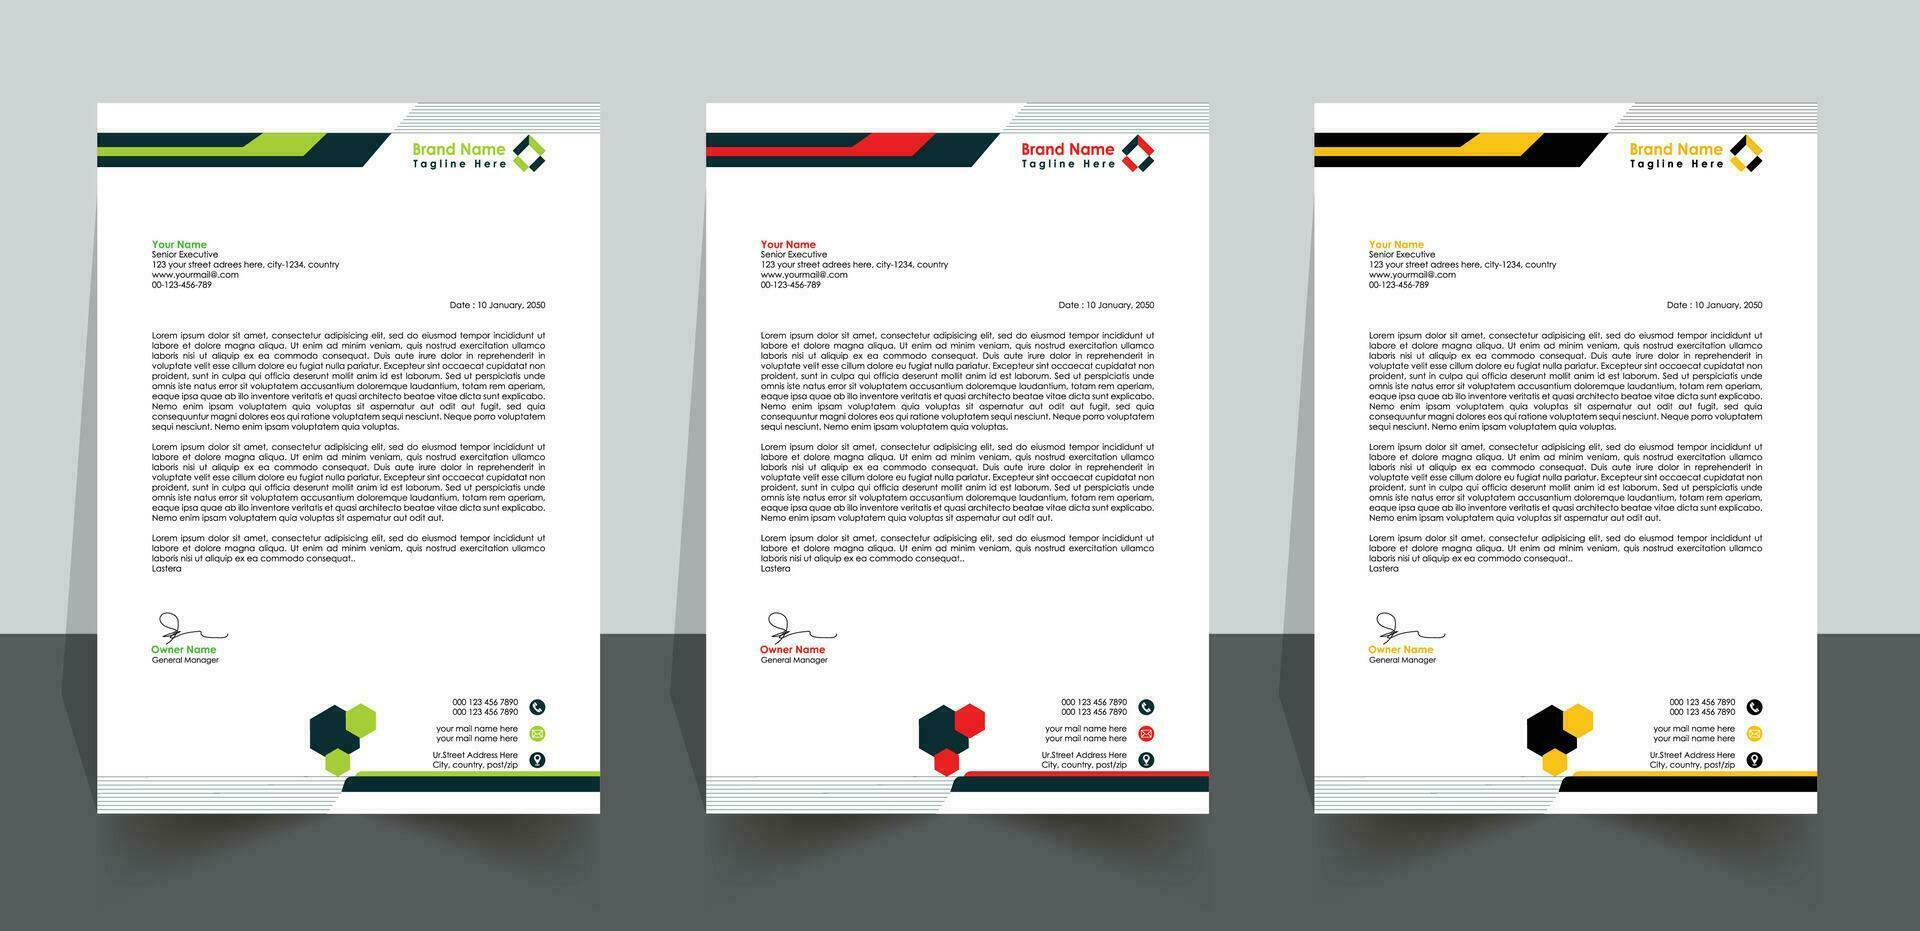 modern letter head design template, Printable size letterhead, Business Pad vector